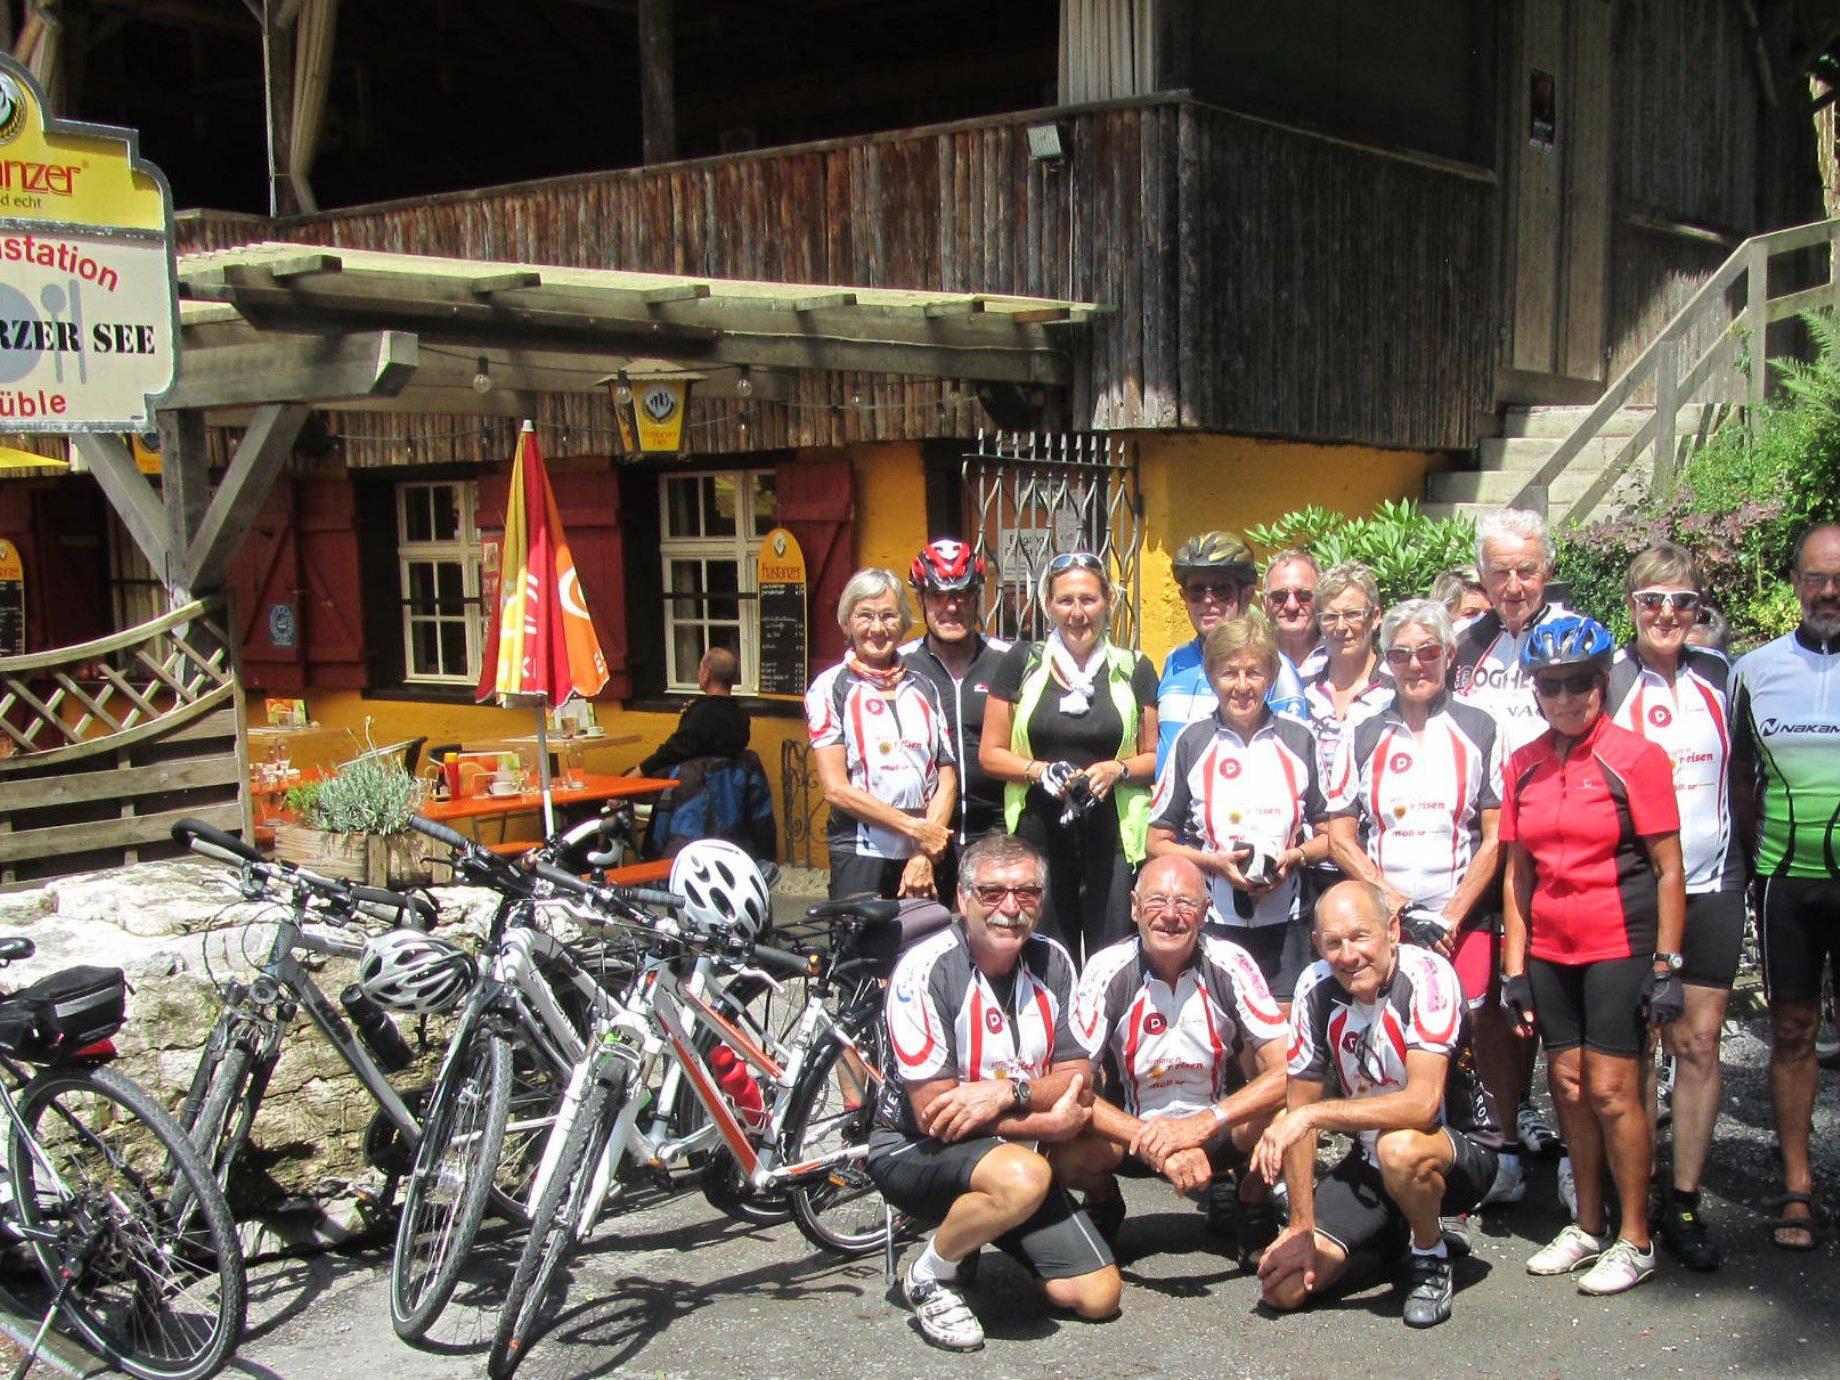 Team per pedales auf Märchental-Tour